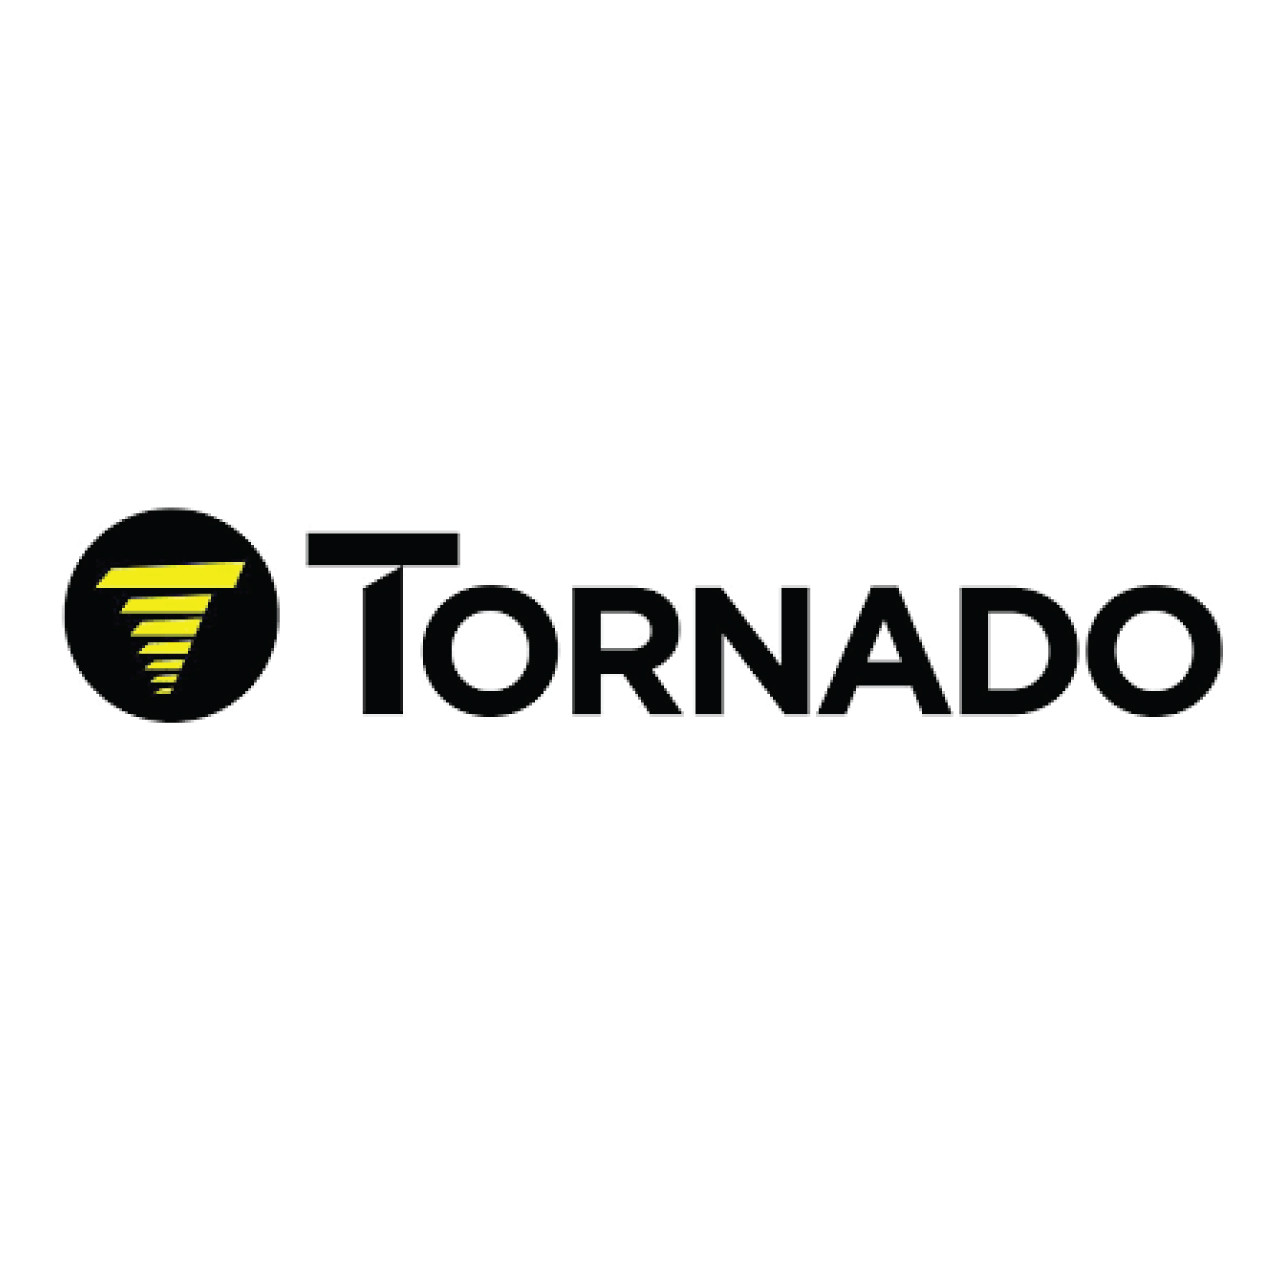 Tornado SCHHP-OX - OPEN STOCK SIMPLICITY COZY HOME HEATER HEATER OAK PROGRAMMABLE THERMOSTAT PIC